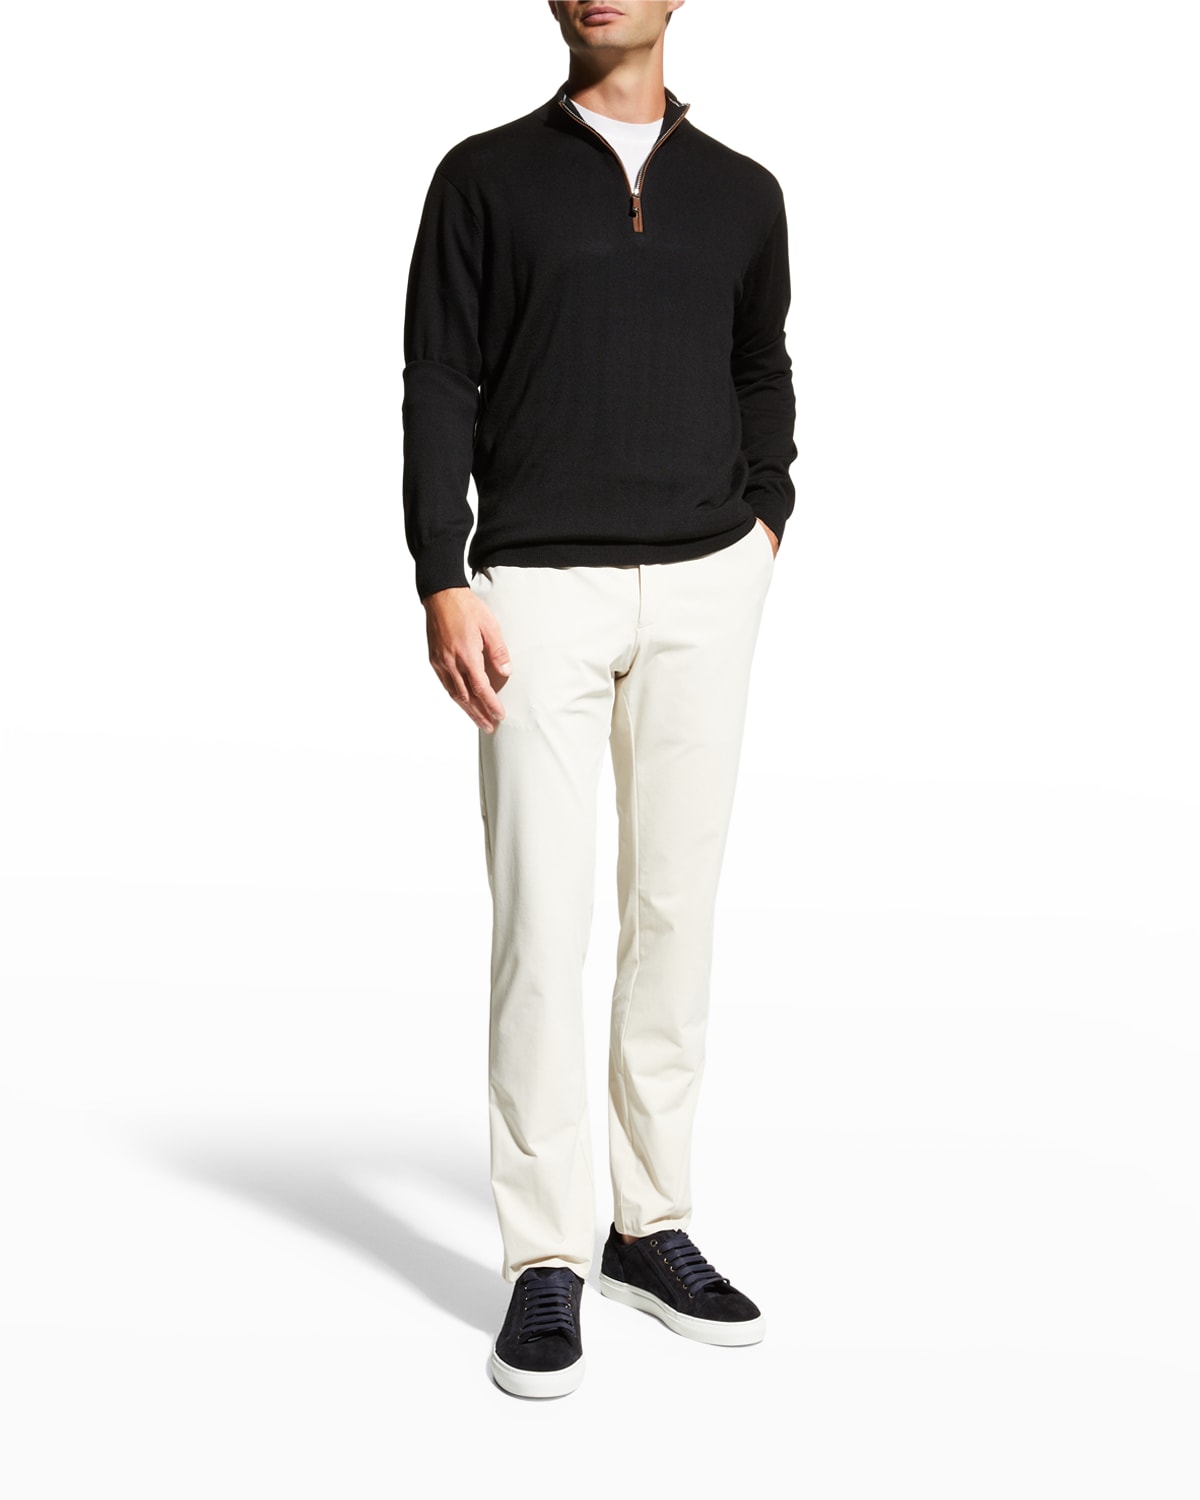 Peter Millar Men's Crown Wool-Blend Quarter-Zip Sweater